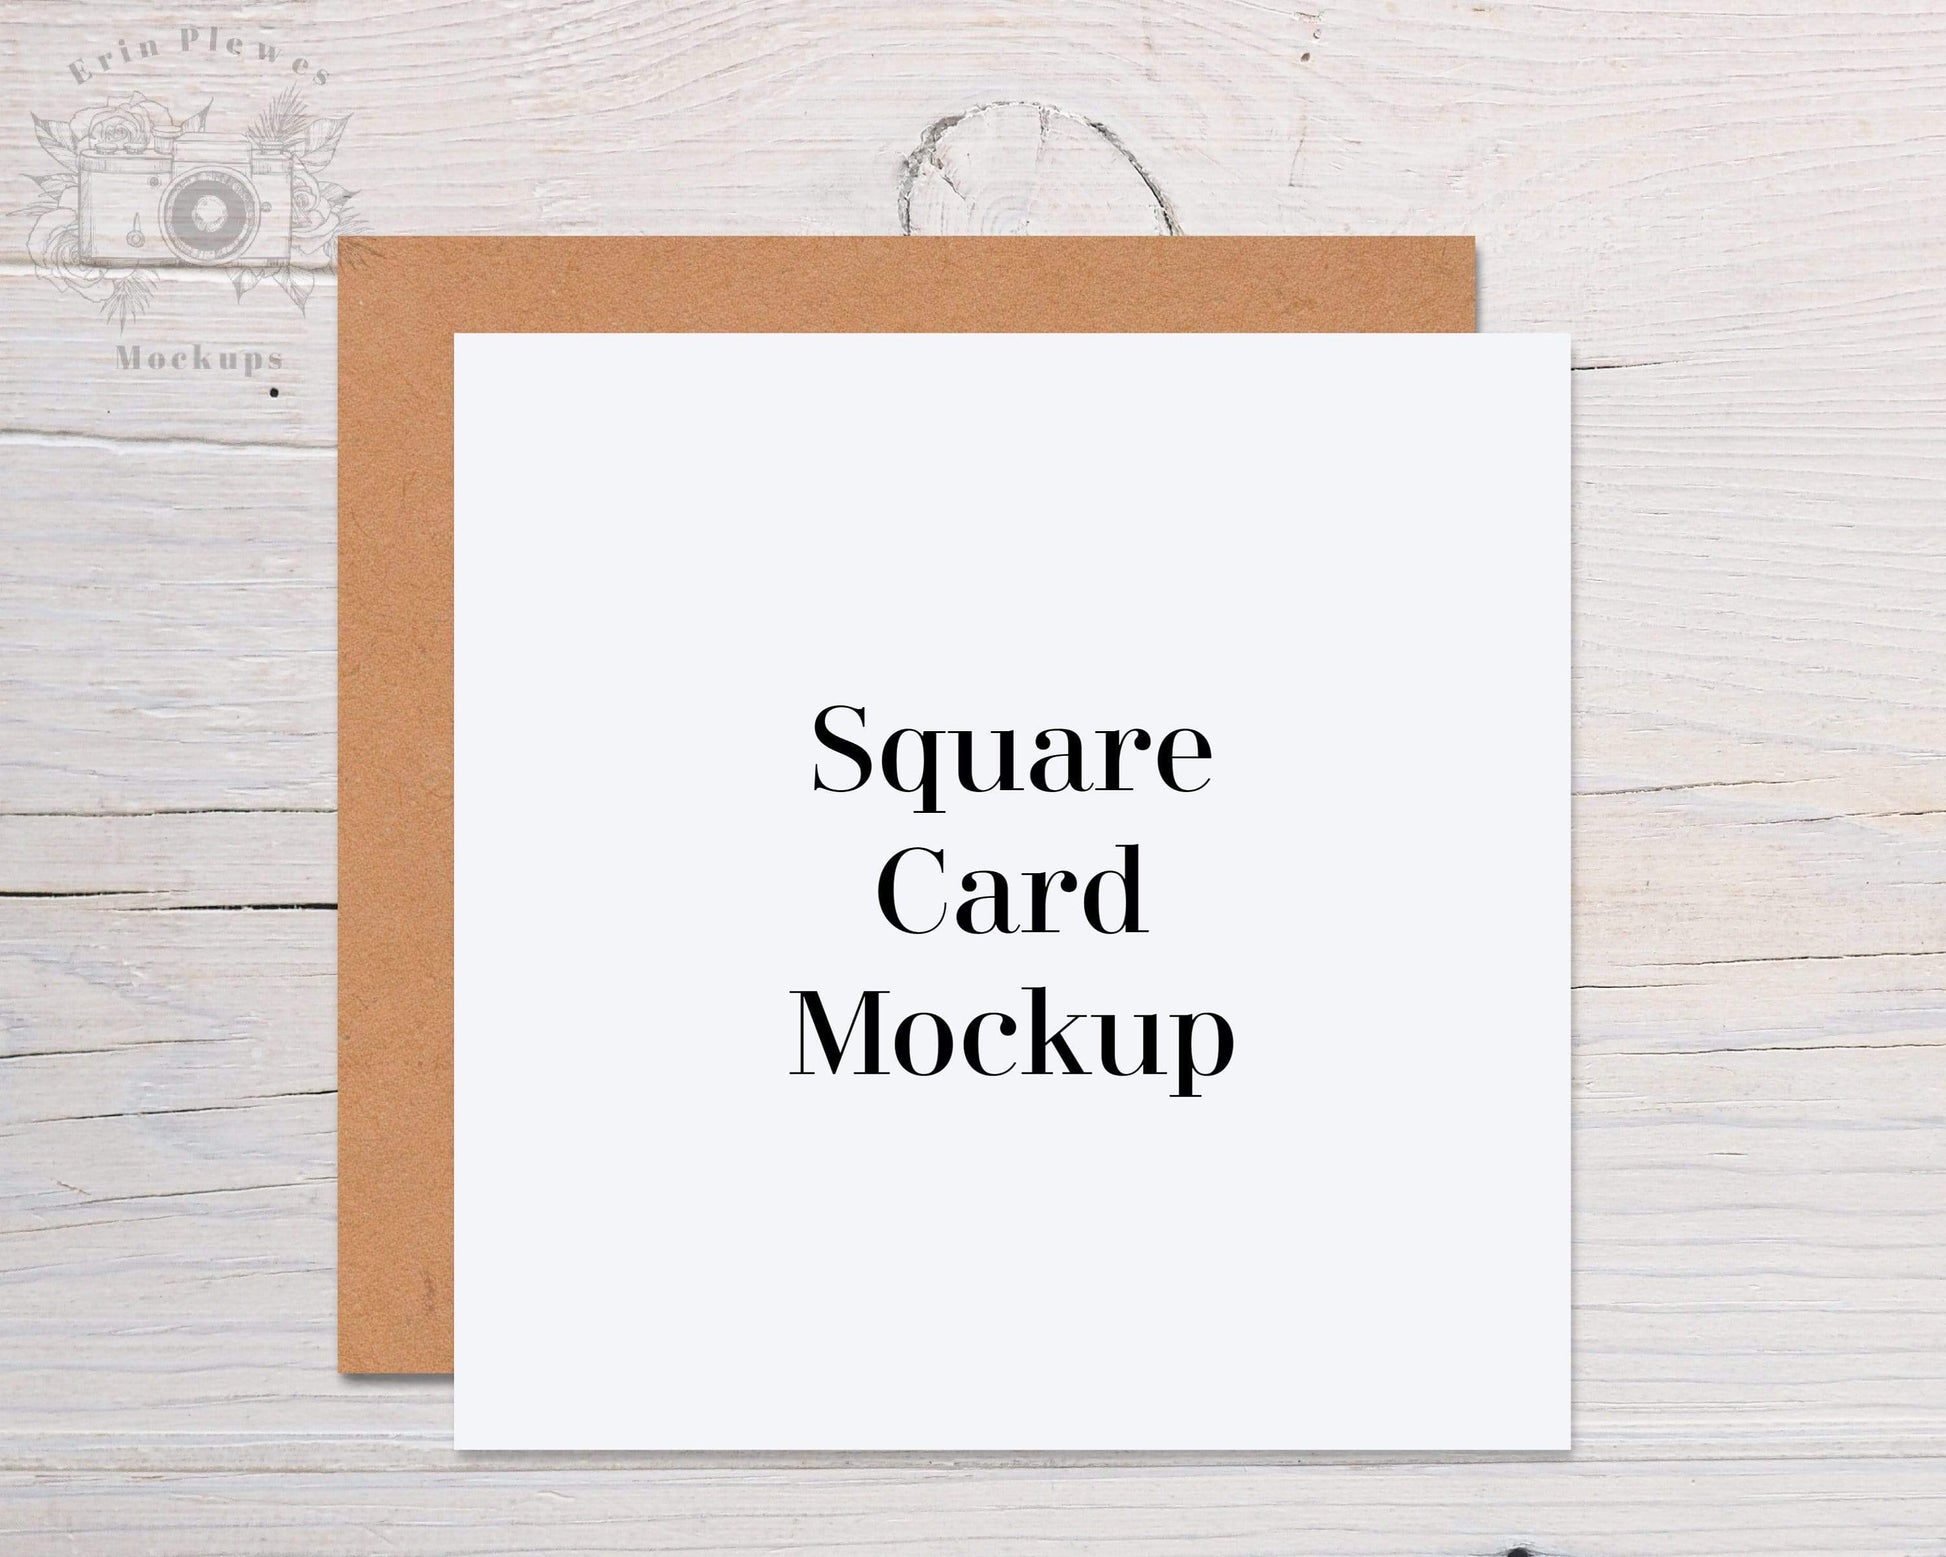 Erin Plewes Mockups Square Card Mockup with Kraft Envelope, Invitation Mock Up on Rustic Wood, Square Stationary Mock-up Template